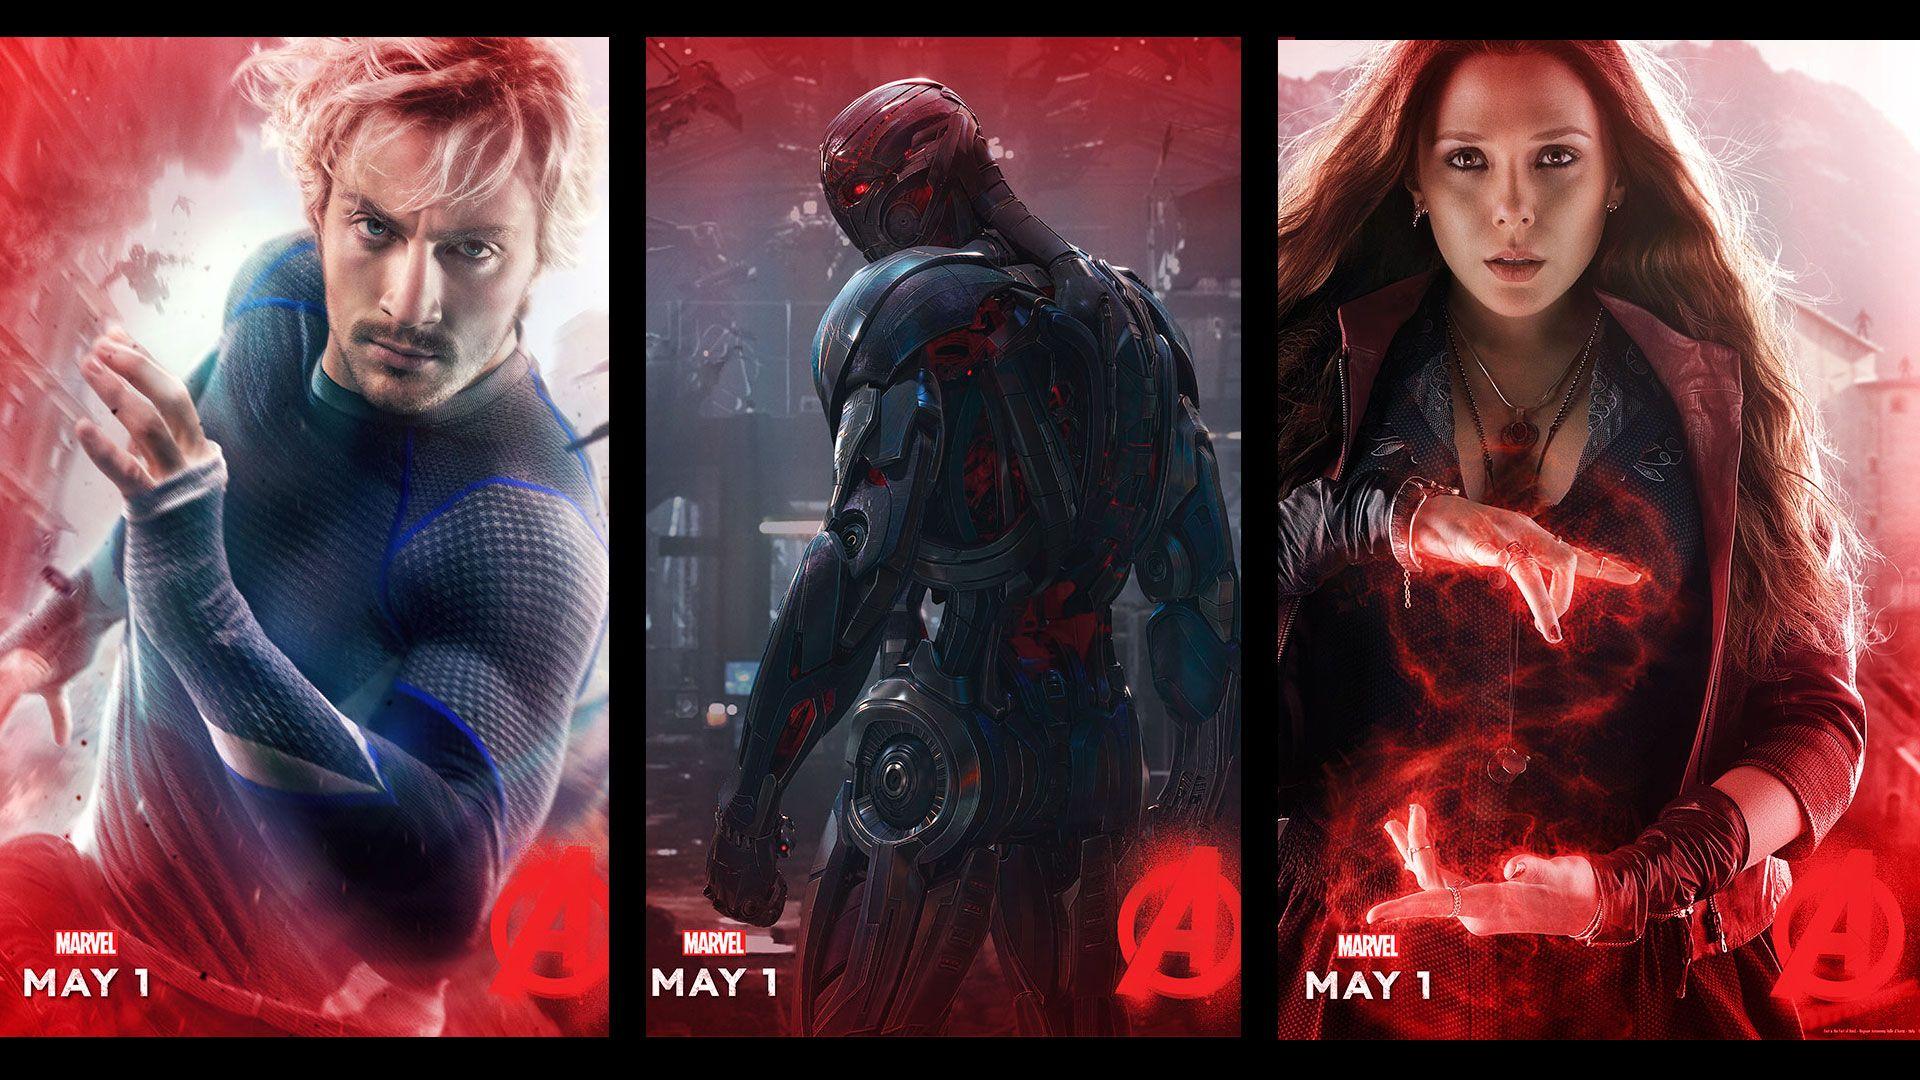 Avengers 2: Age of Ultron 2015 Desktop & iPhone Wallpaper HD